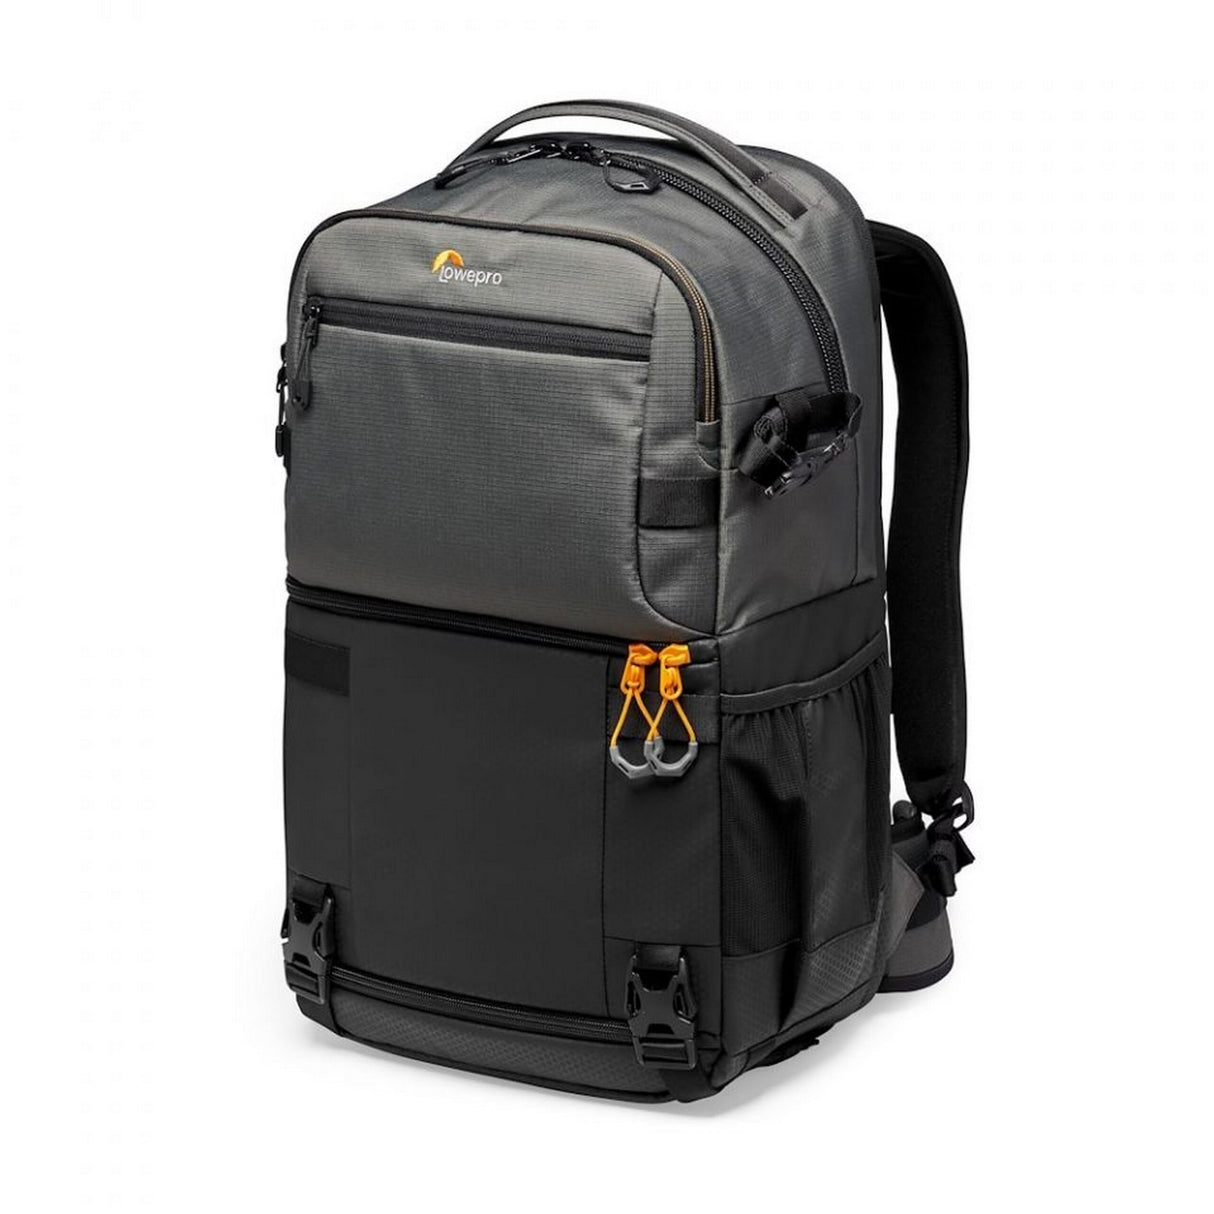 Lowepro LP37331-PWW Fastpack Pro BP 250 AW III Backpack, Grey